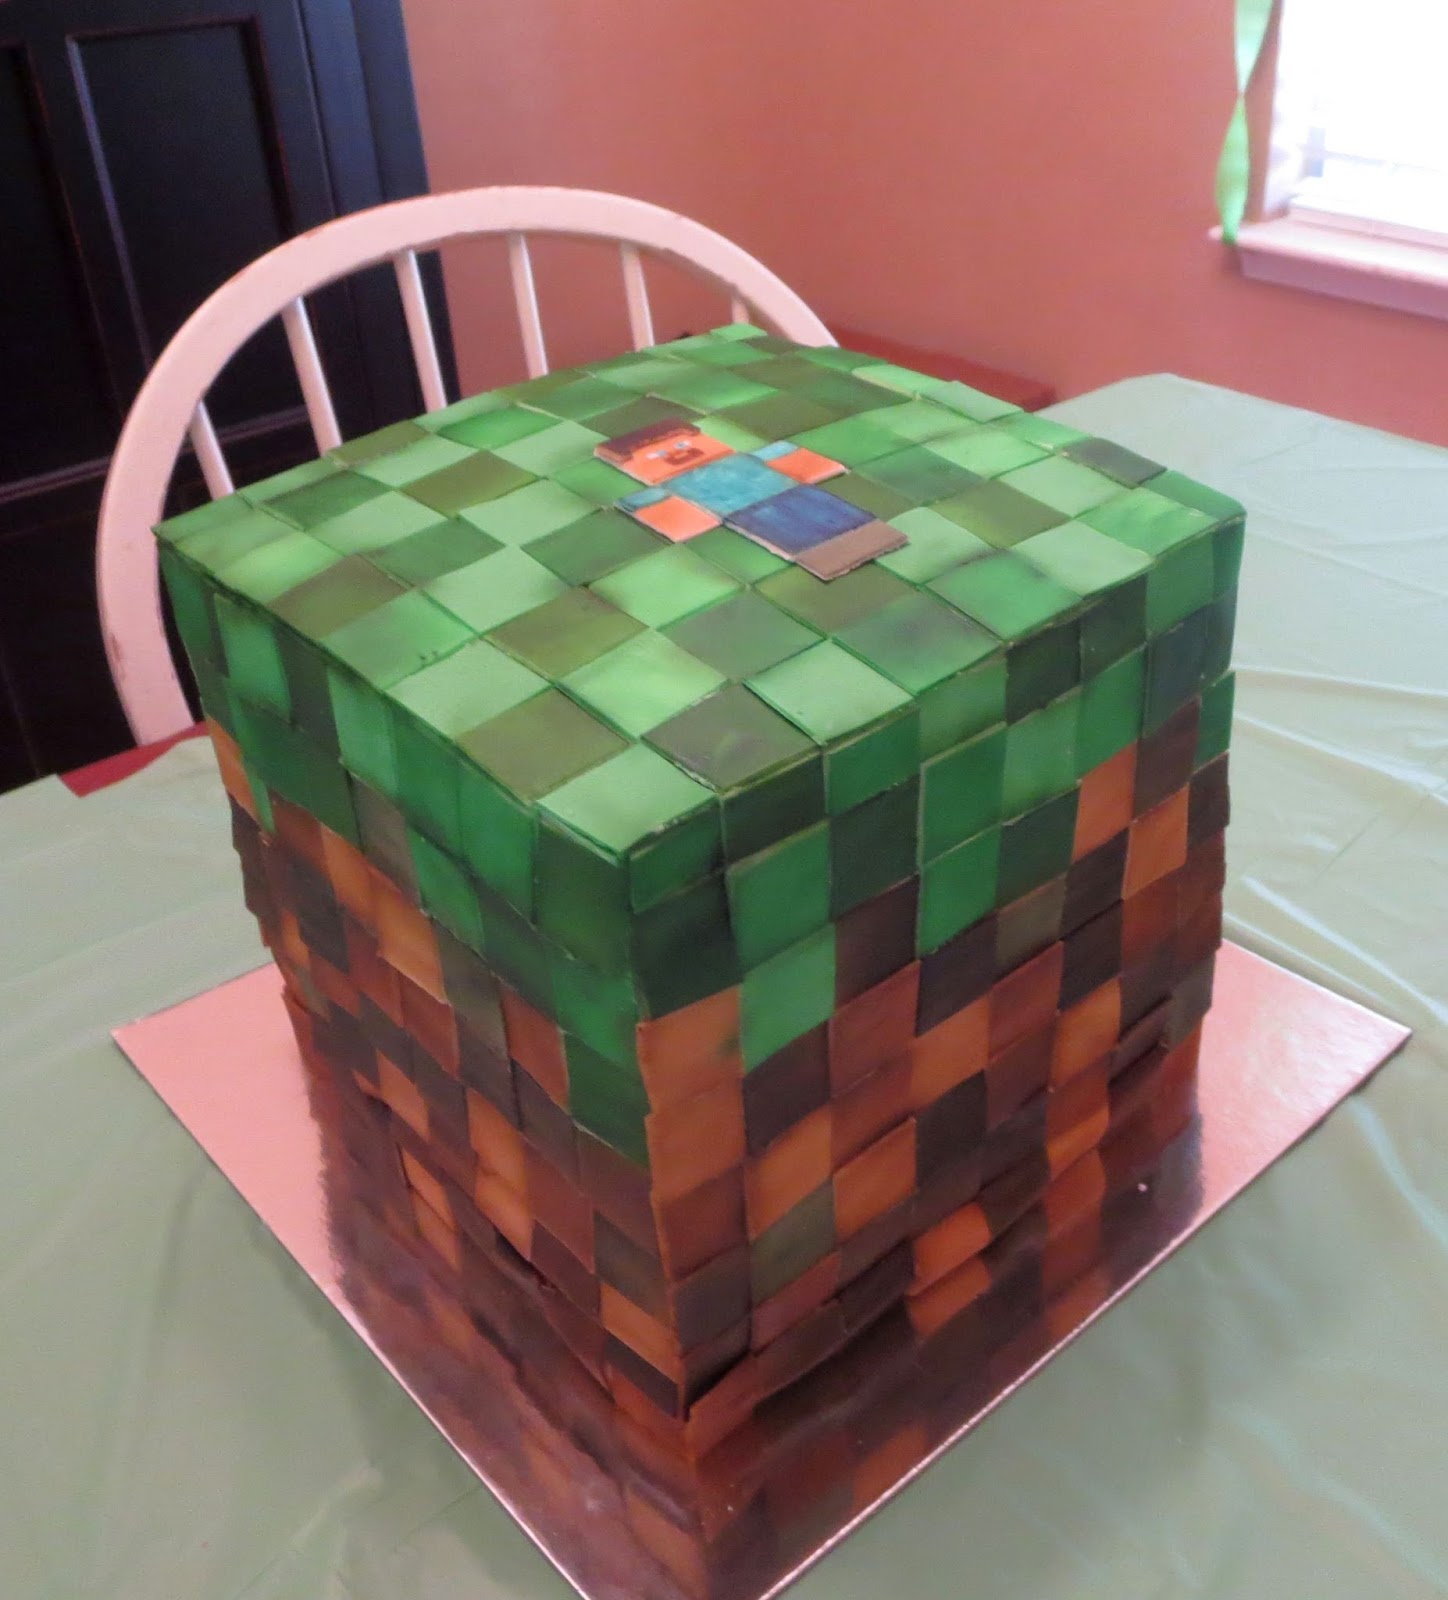 My Cake Corner: Minecraft Grass Block Cake - Minecraft%2Bgrass%2Bblock%2Bcake%2Bapril%2B2014%2B001